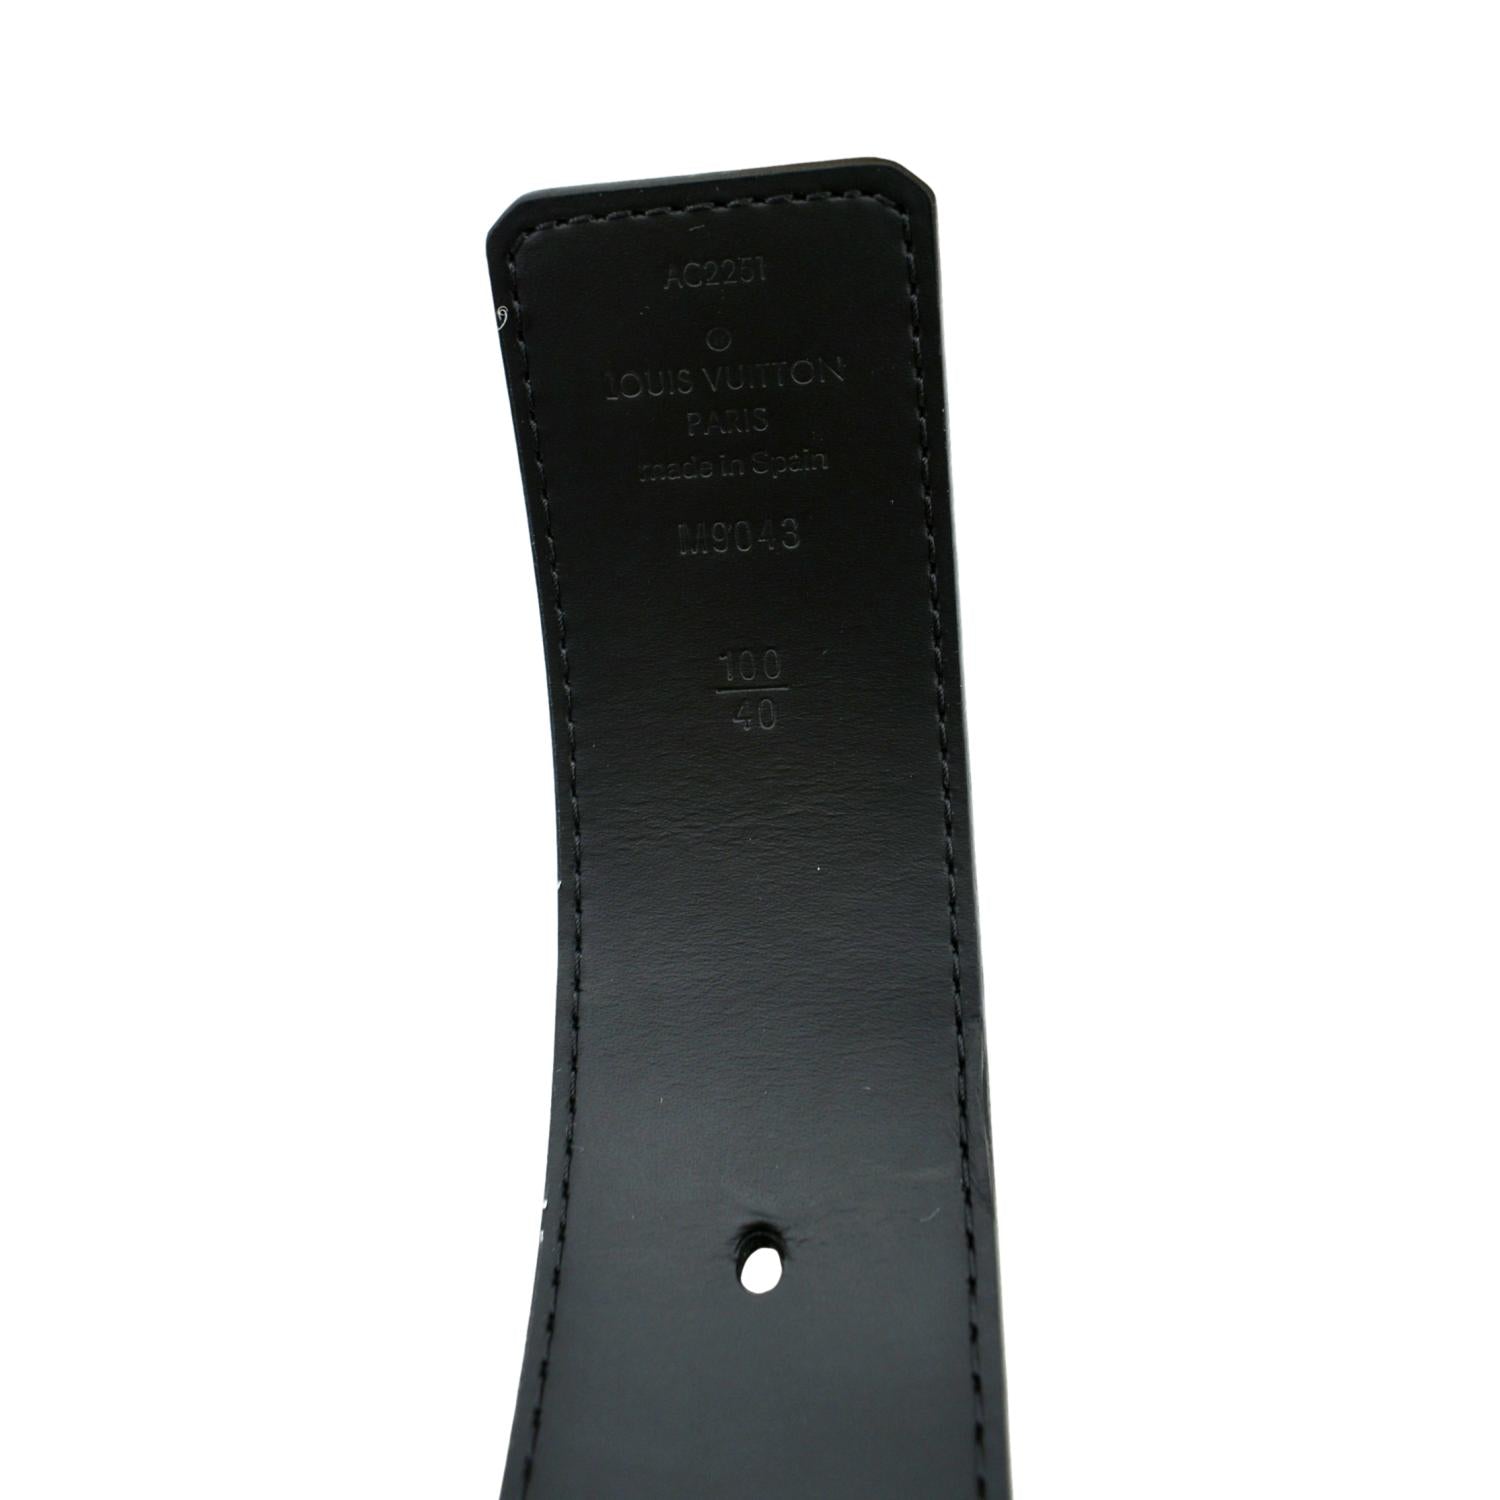 Louis Vuitton Initials LV Belt Matte Black for Sale in San Jose, CA